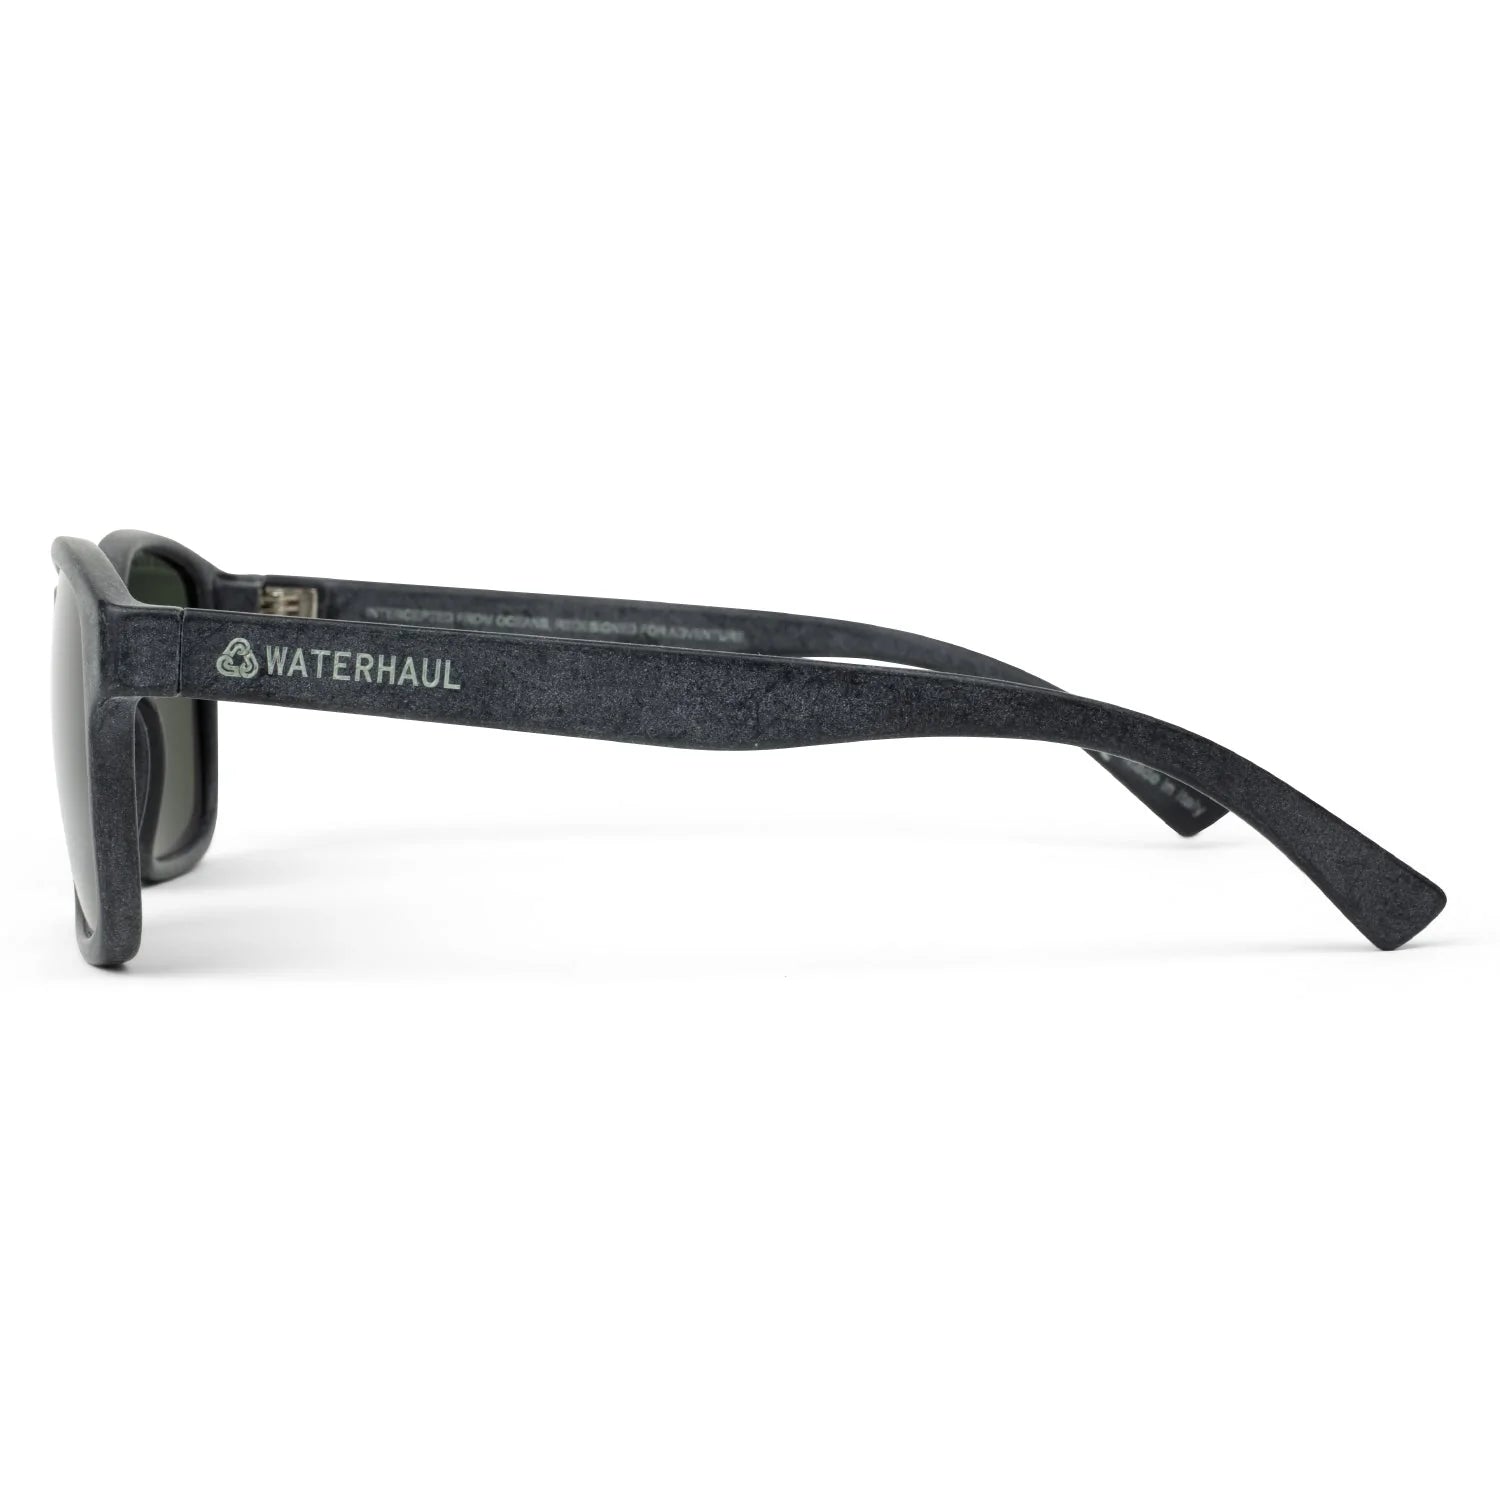 Waterhaul Pentire Slate - Recycled Fishing Net Sunglasses - Worthing Watersports - Pentire Slate - Grey Polarised Mineral Glass+ - WATERHAUL